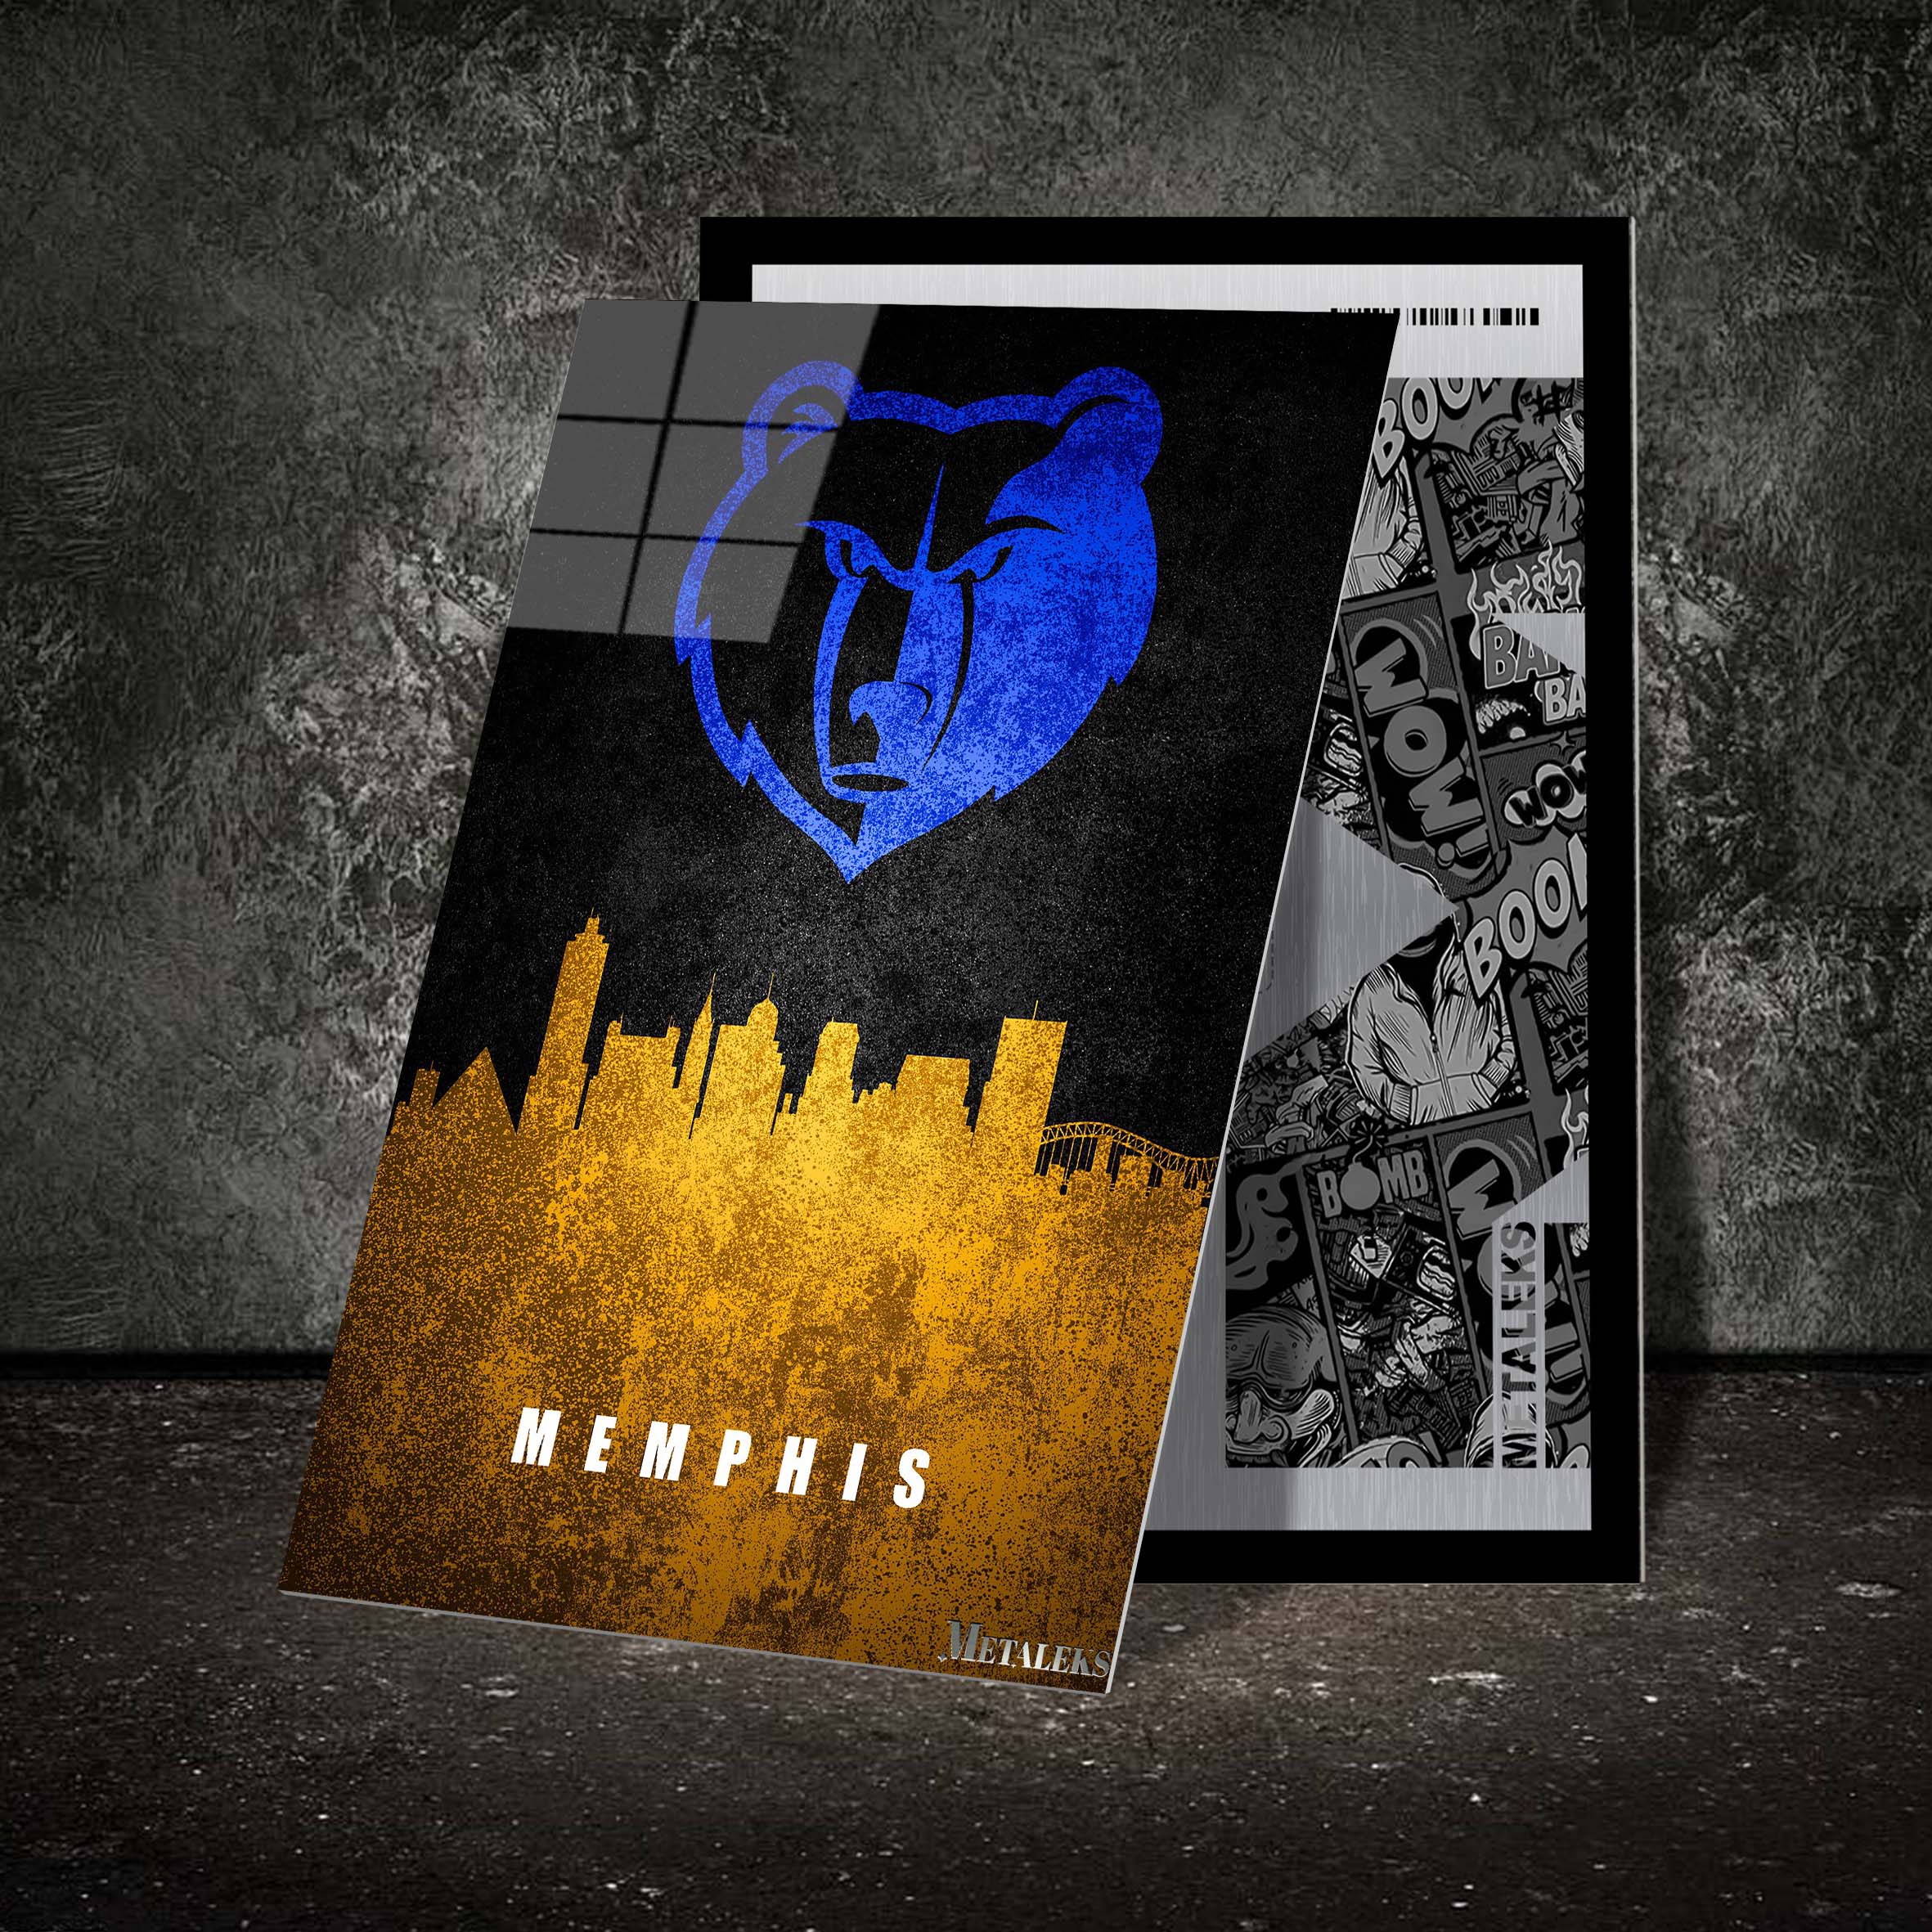 Memphis Grizzlies-designed by @Hoang Van Thuan